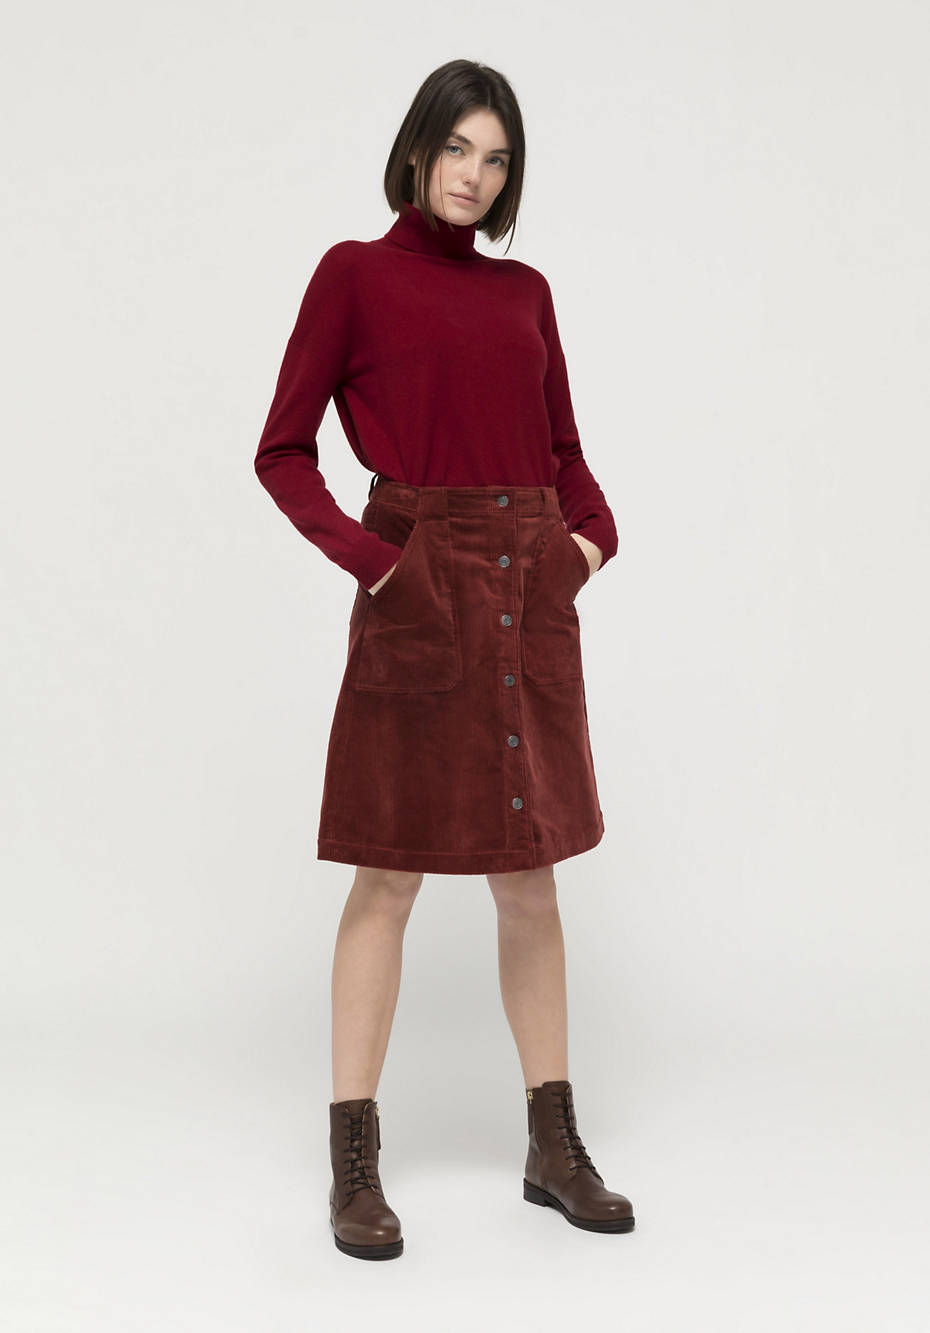 Cord skirt made of organic cotton